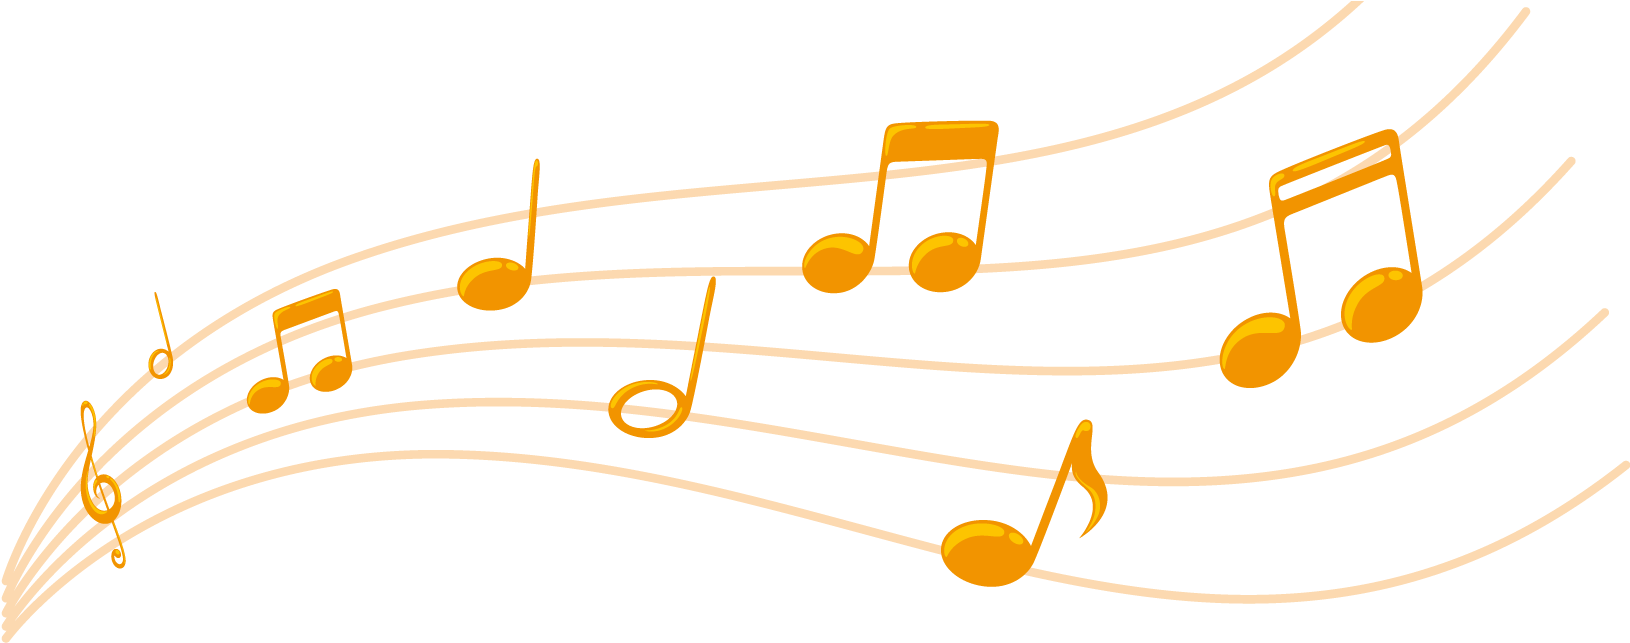 Musical Note Clip Art - Music Symbols (1640x642)